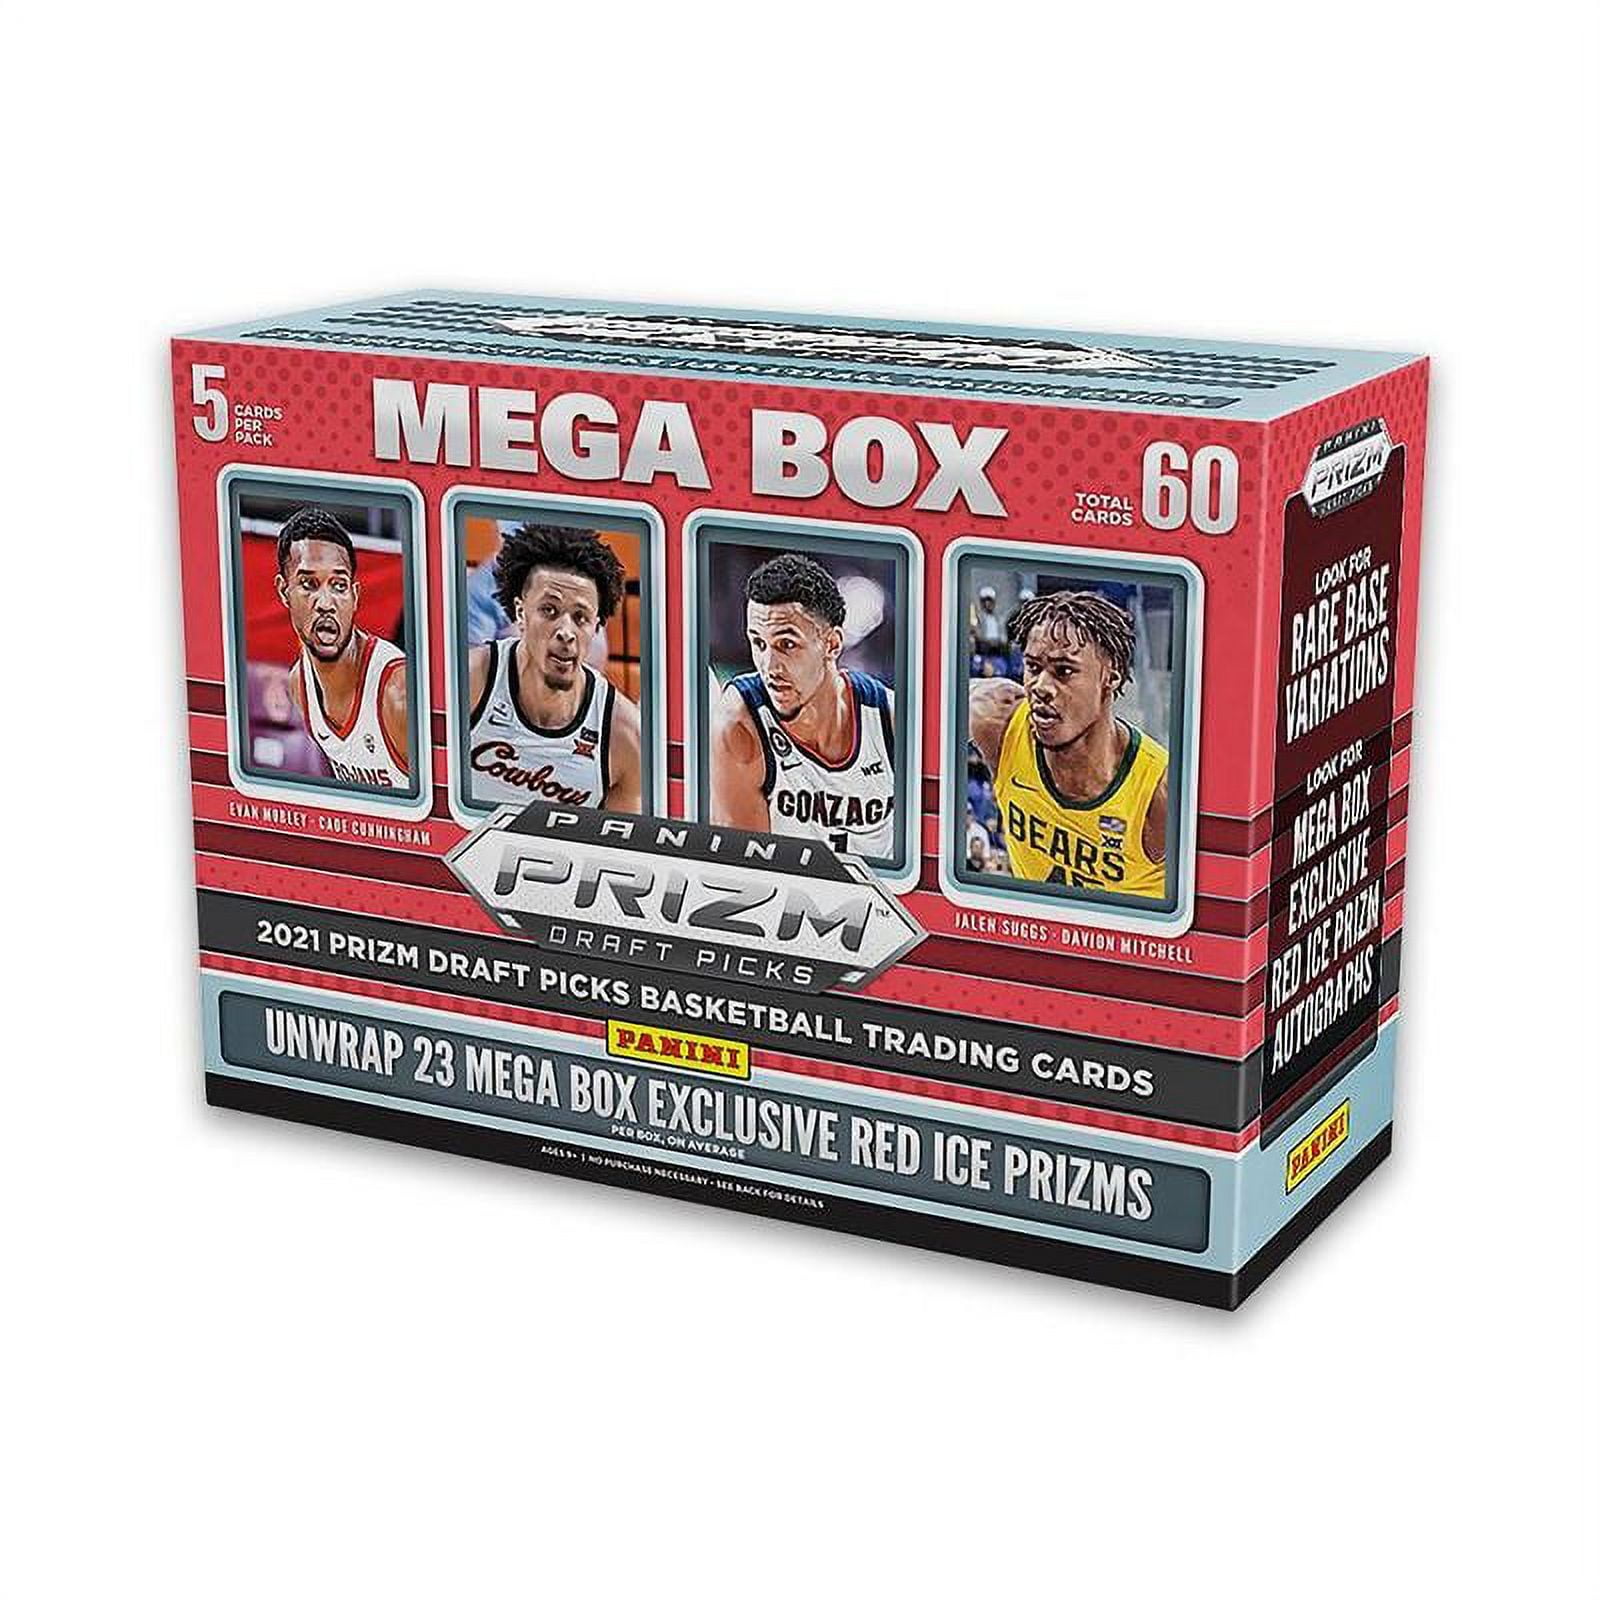 Panini Prizm Draft Picks Basketball Mega Box Trading Cards